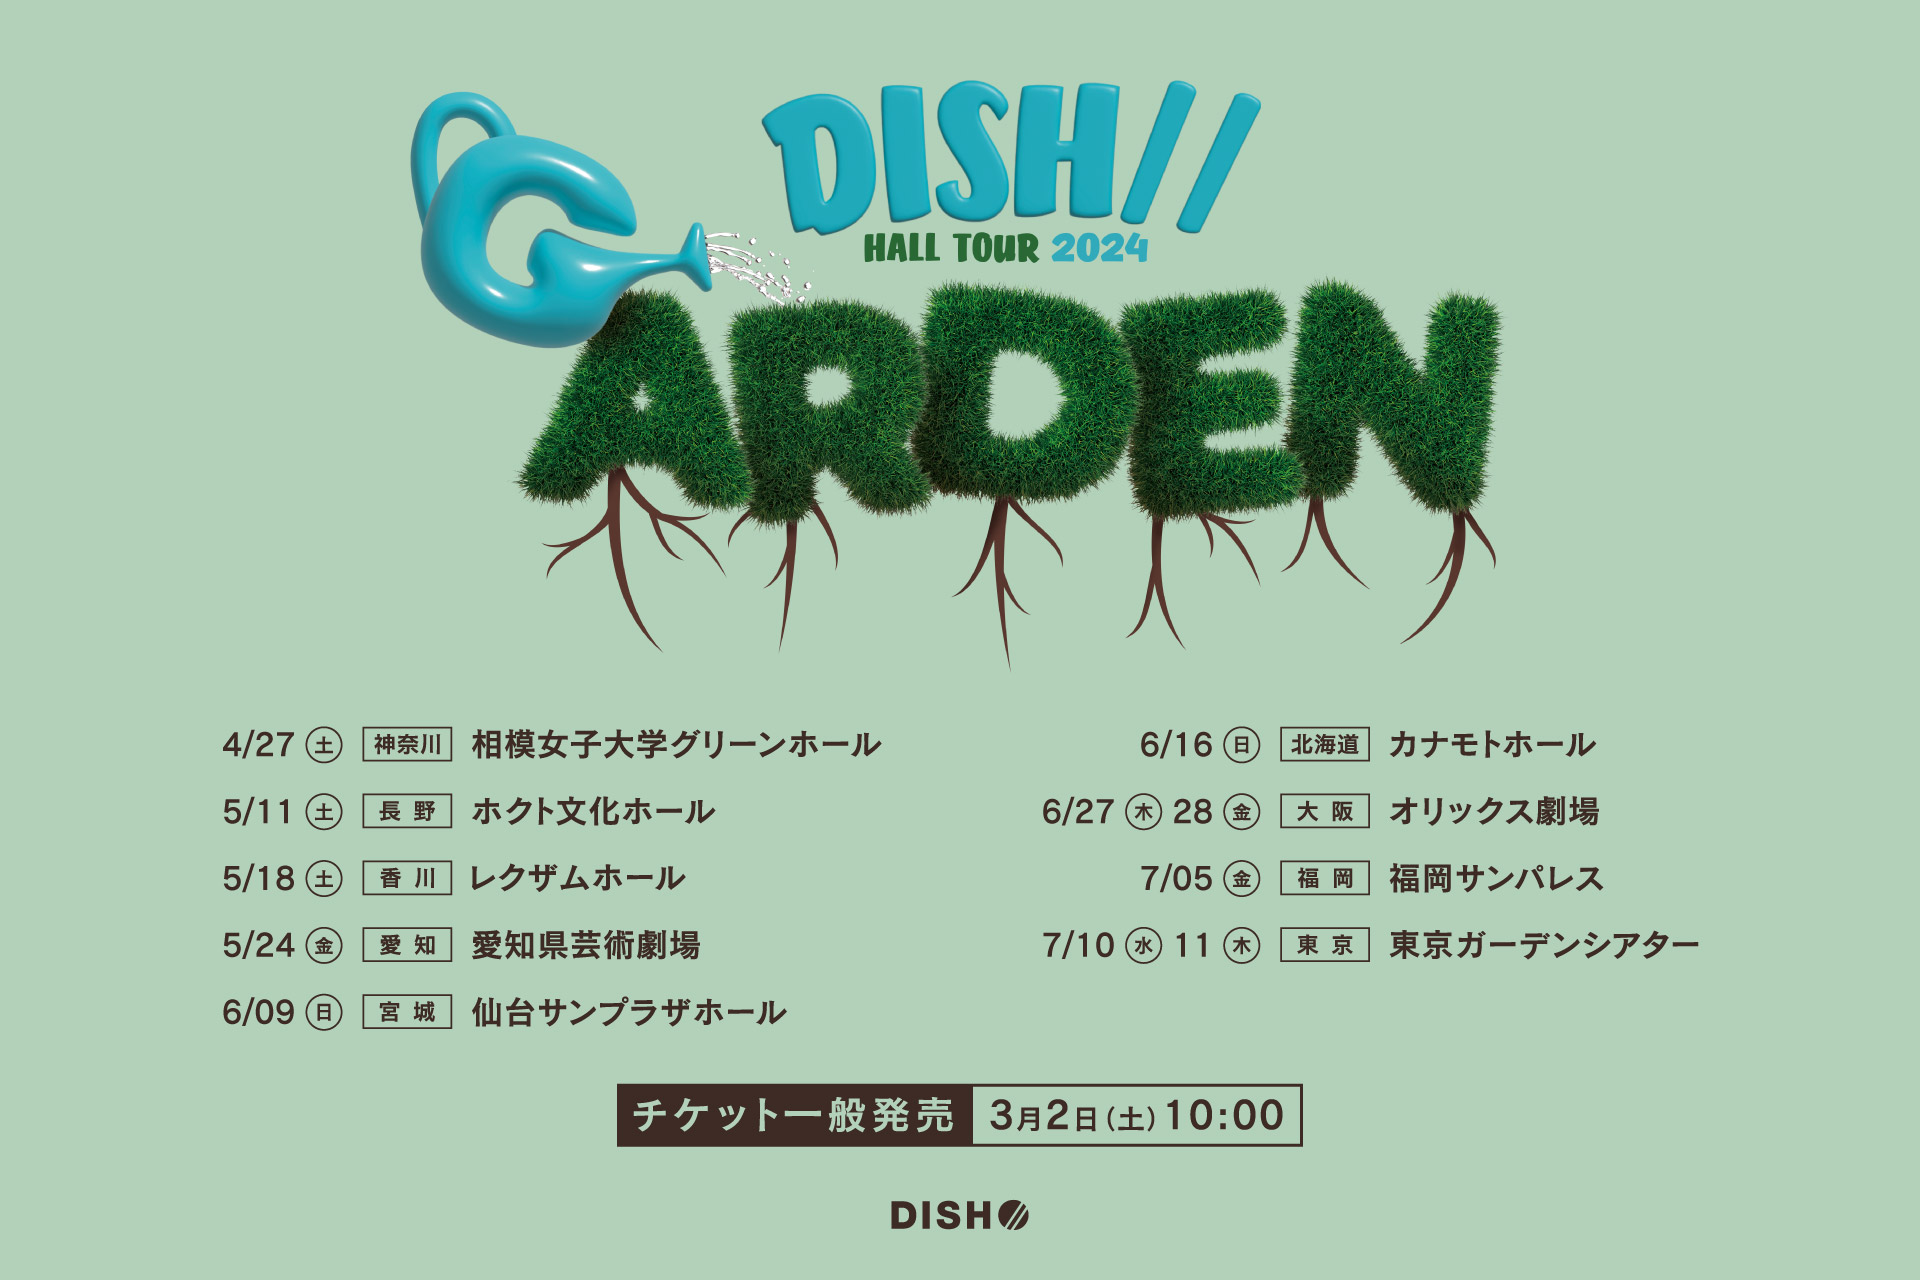 DISH// HALL TOUR 2024